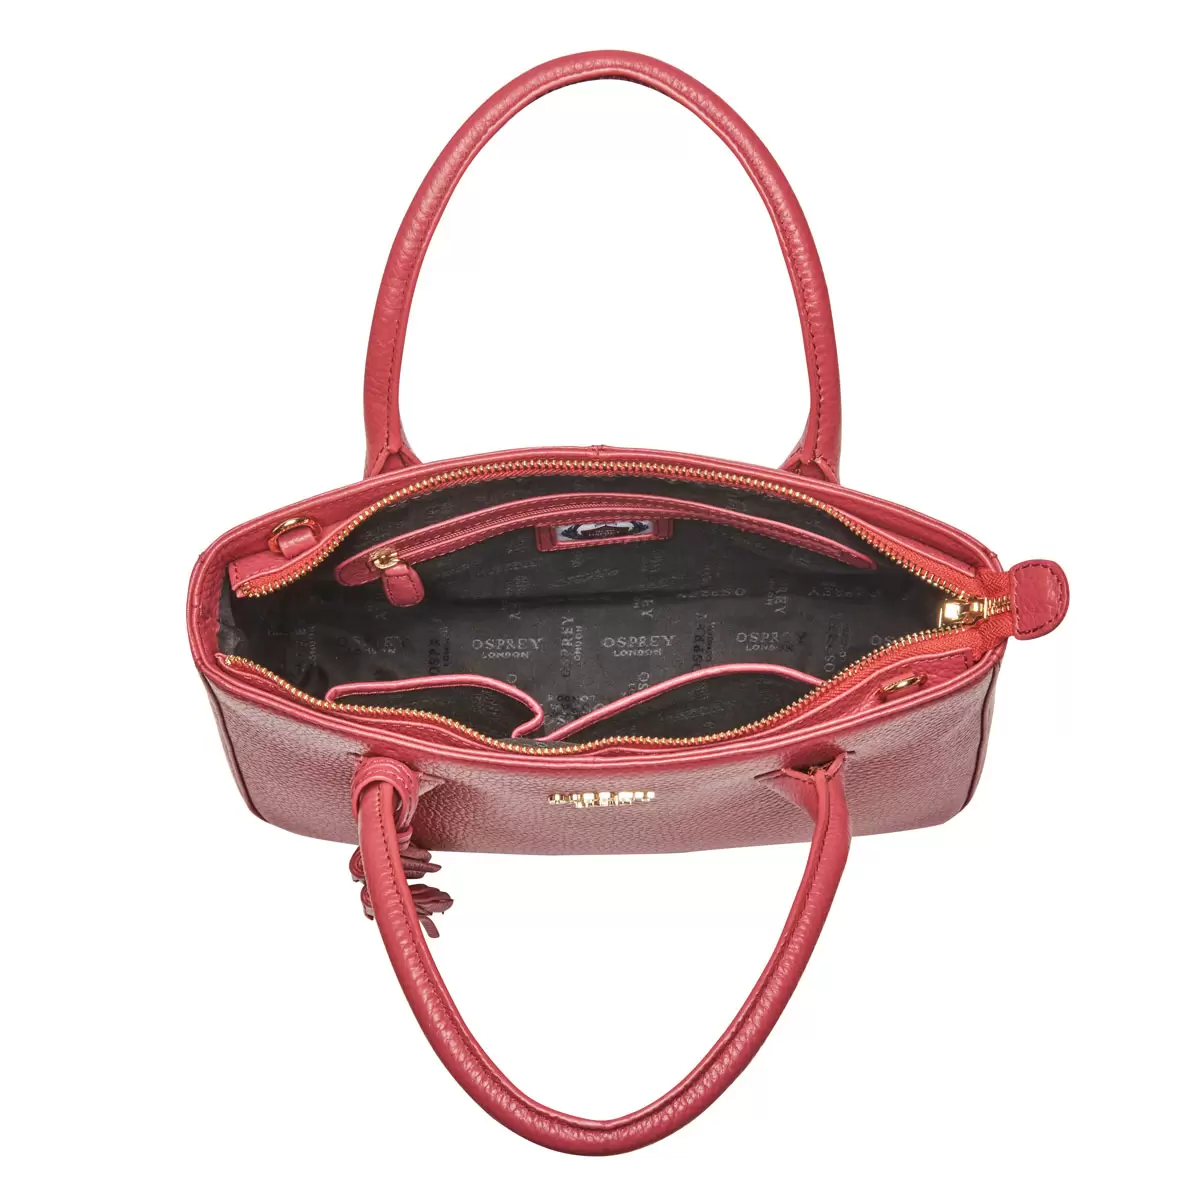 Osprey London Coast Leather Women's Grab Handbag, Cardinal